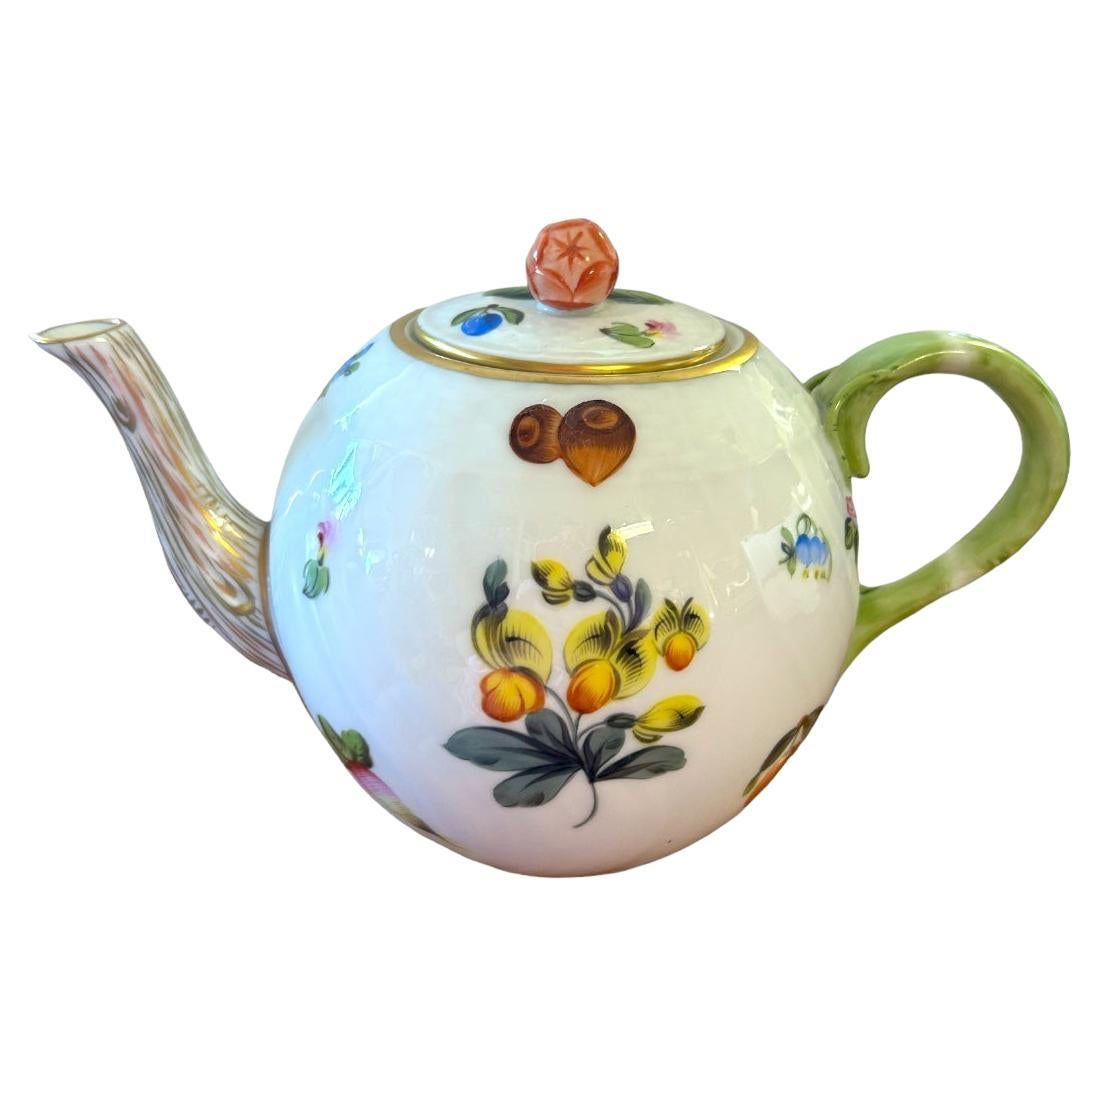 Vintage Herend Tea Pot with Floral and Gold Details